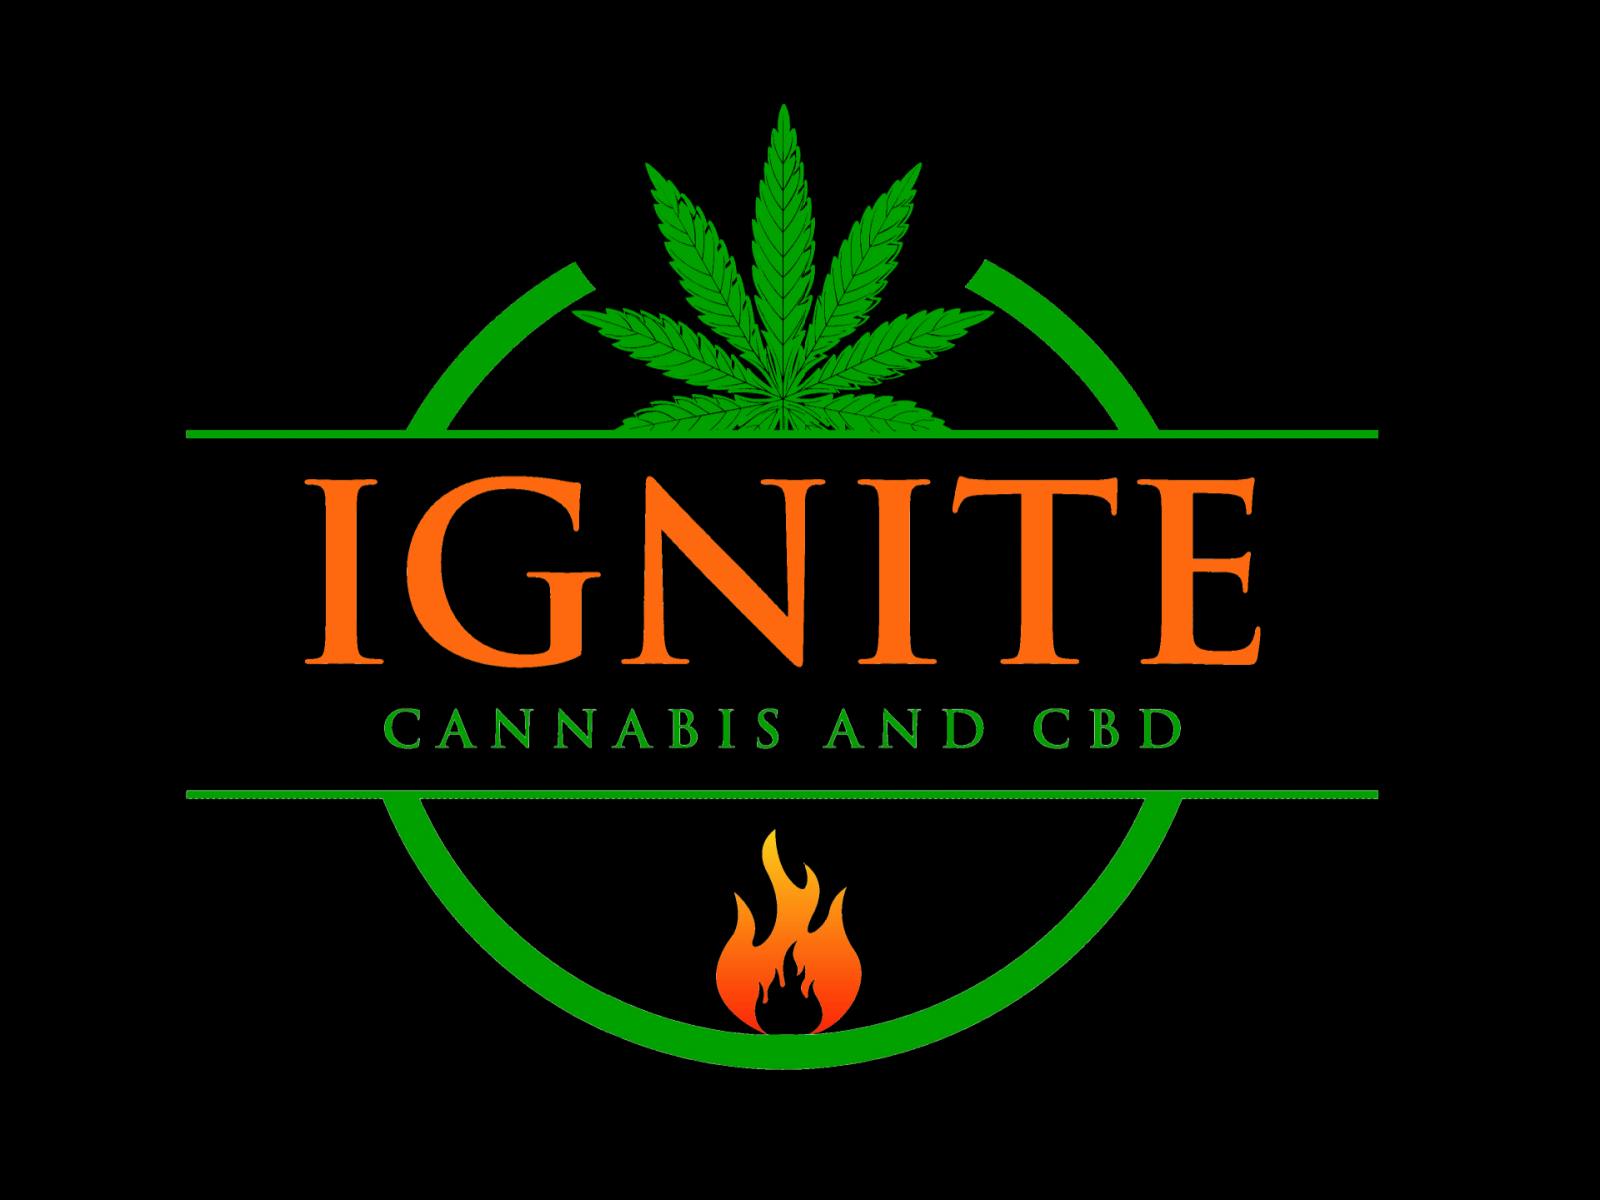 Ignite Cannabis And CBD logo